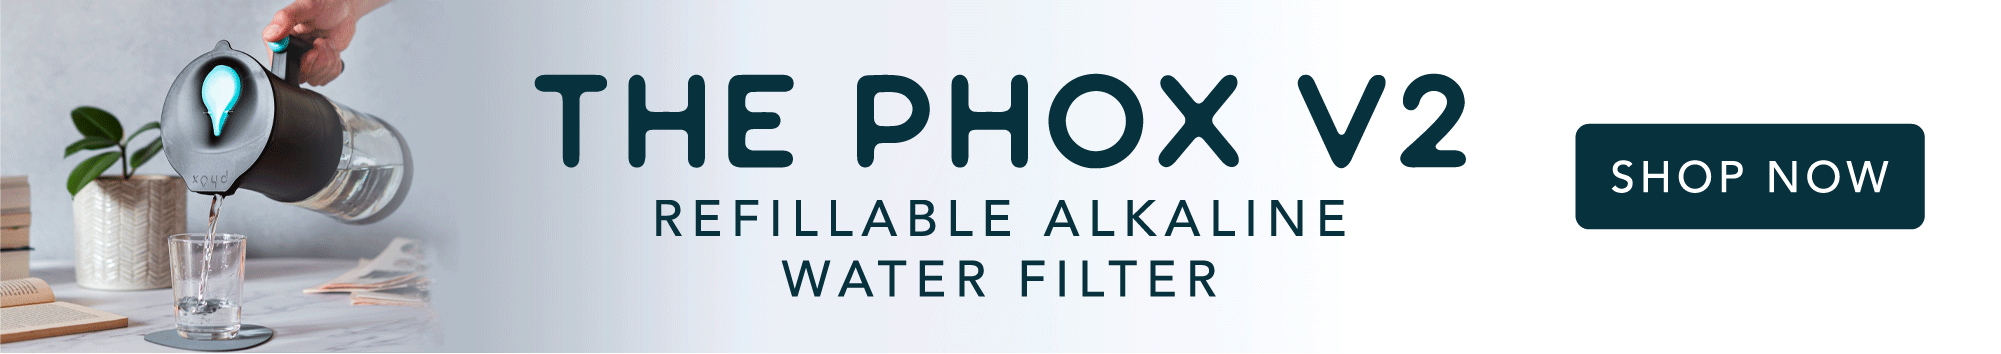 Refillable Alkaline Water Filter